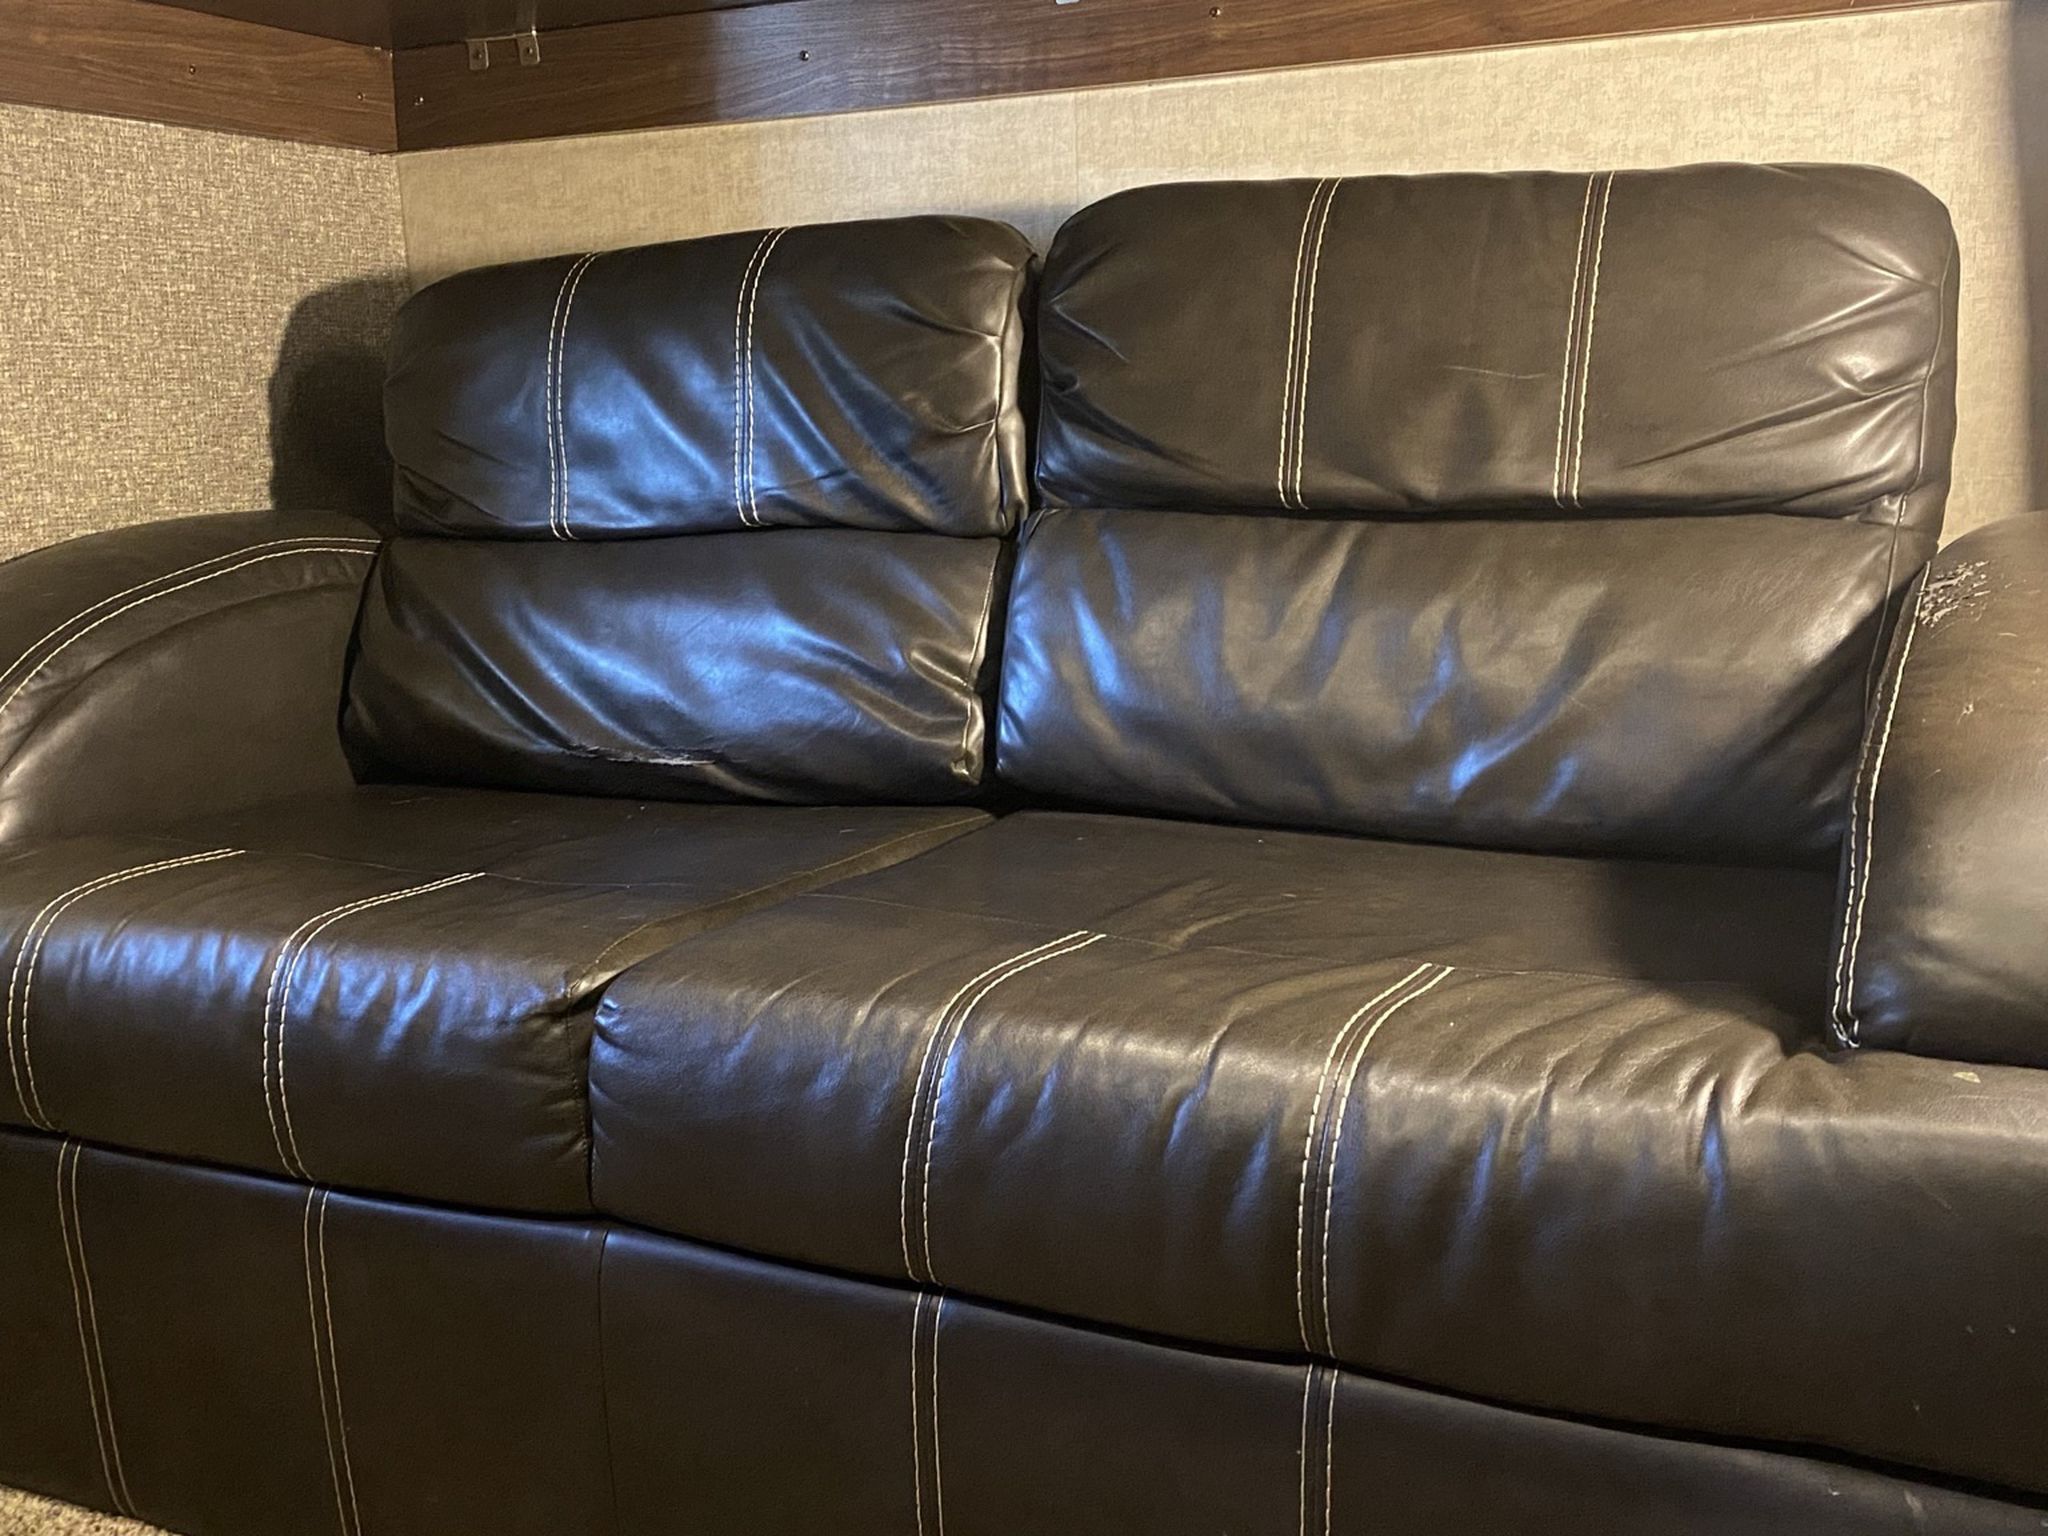 RV sleeper sofa with storage